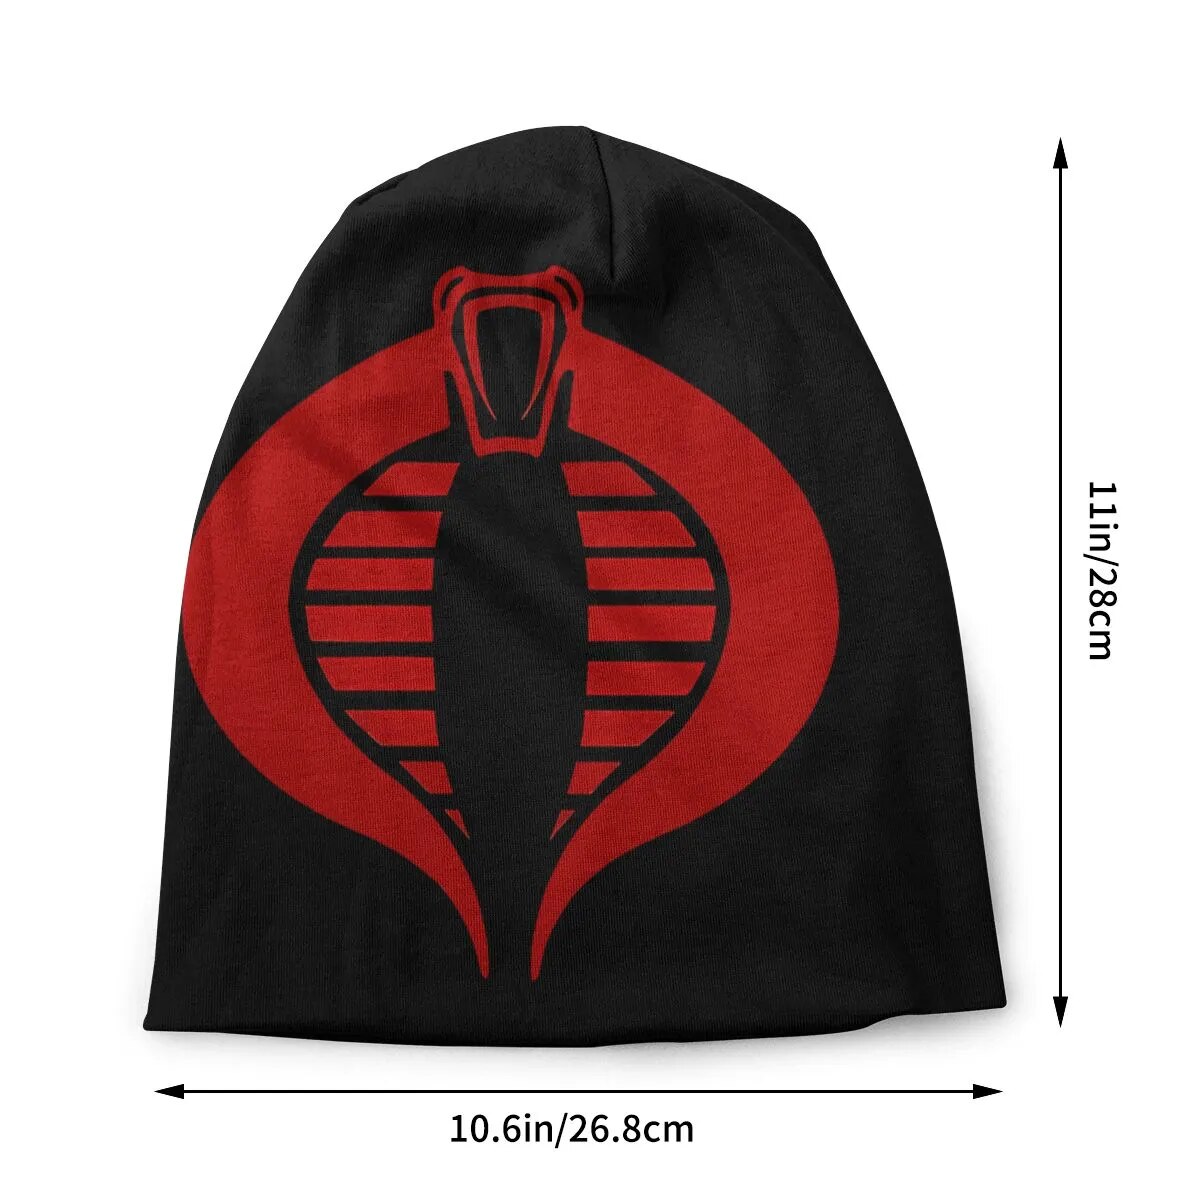 G.I. Joe Black Beanie with Cobra Logo: Unisex Thin Skullies Beanies for All Seasons - Stylish and Warm